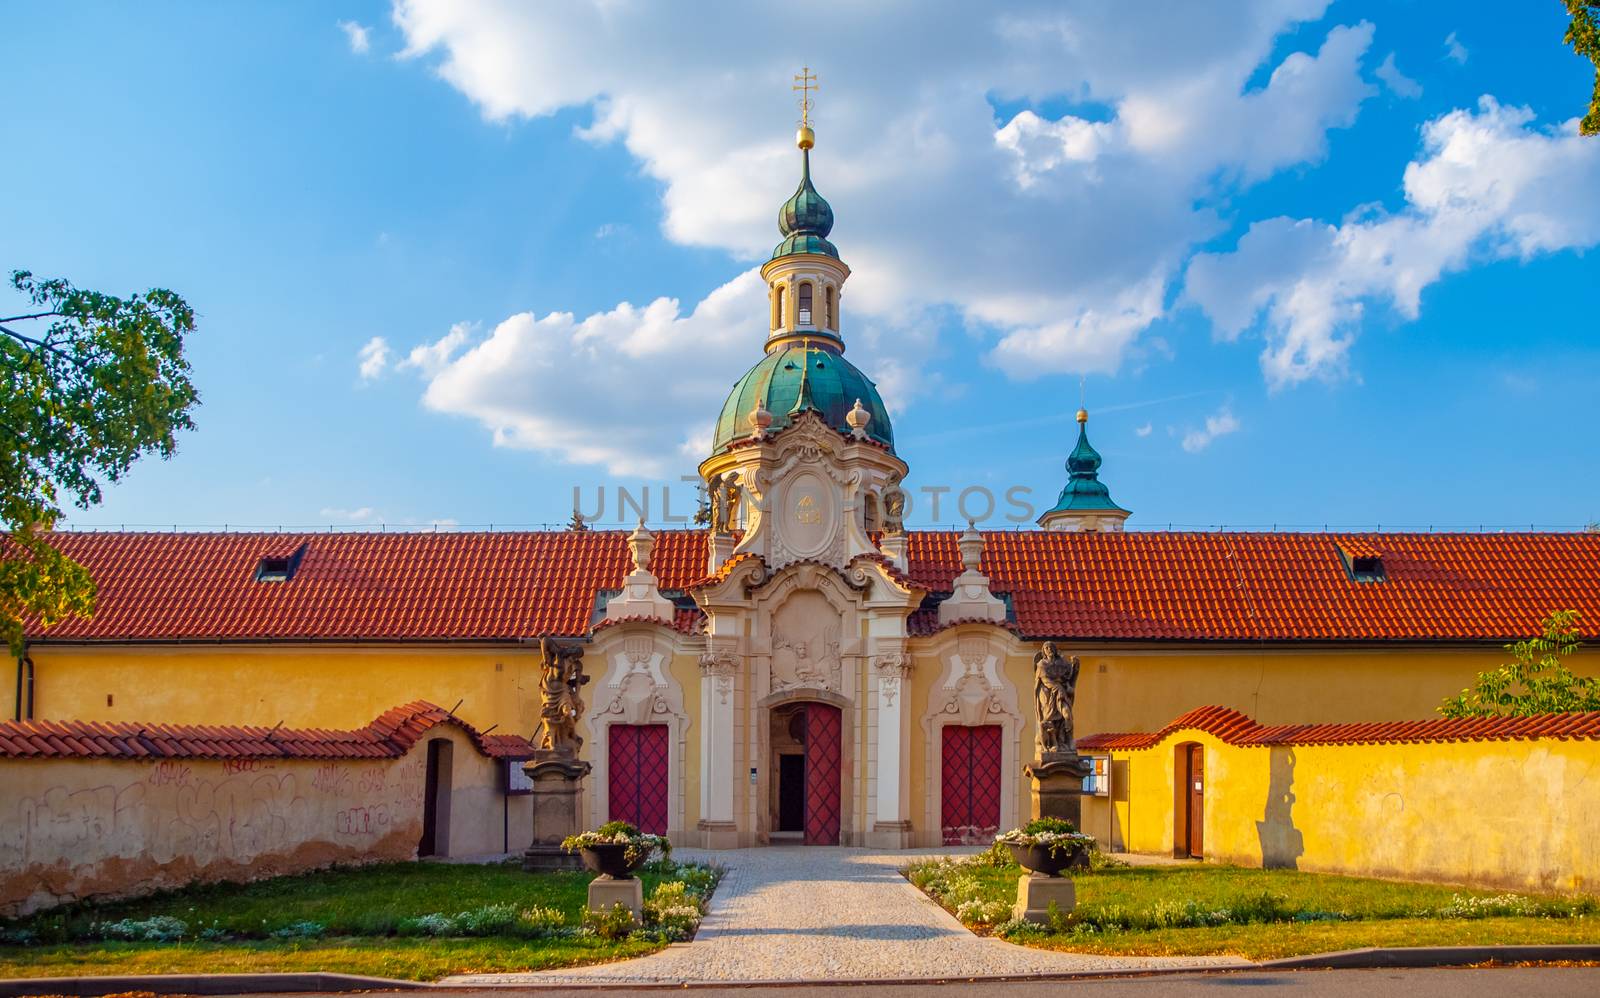 Baroque Church of Our Lady Victorious at Bila Hora in Venio Abbey - Benedictine Monastery, Prague, Czech Republic.